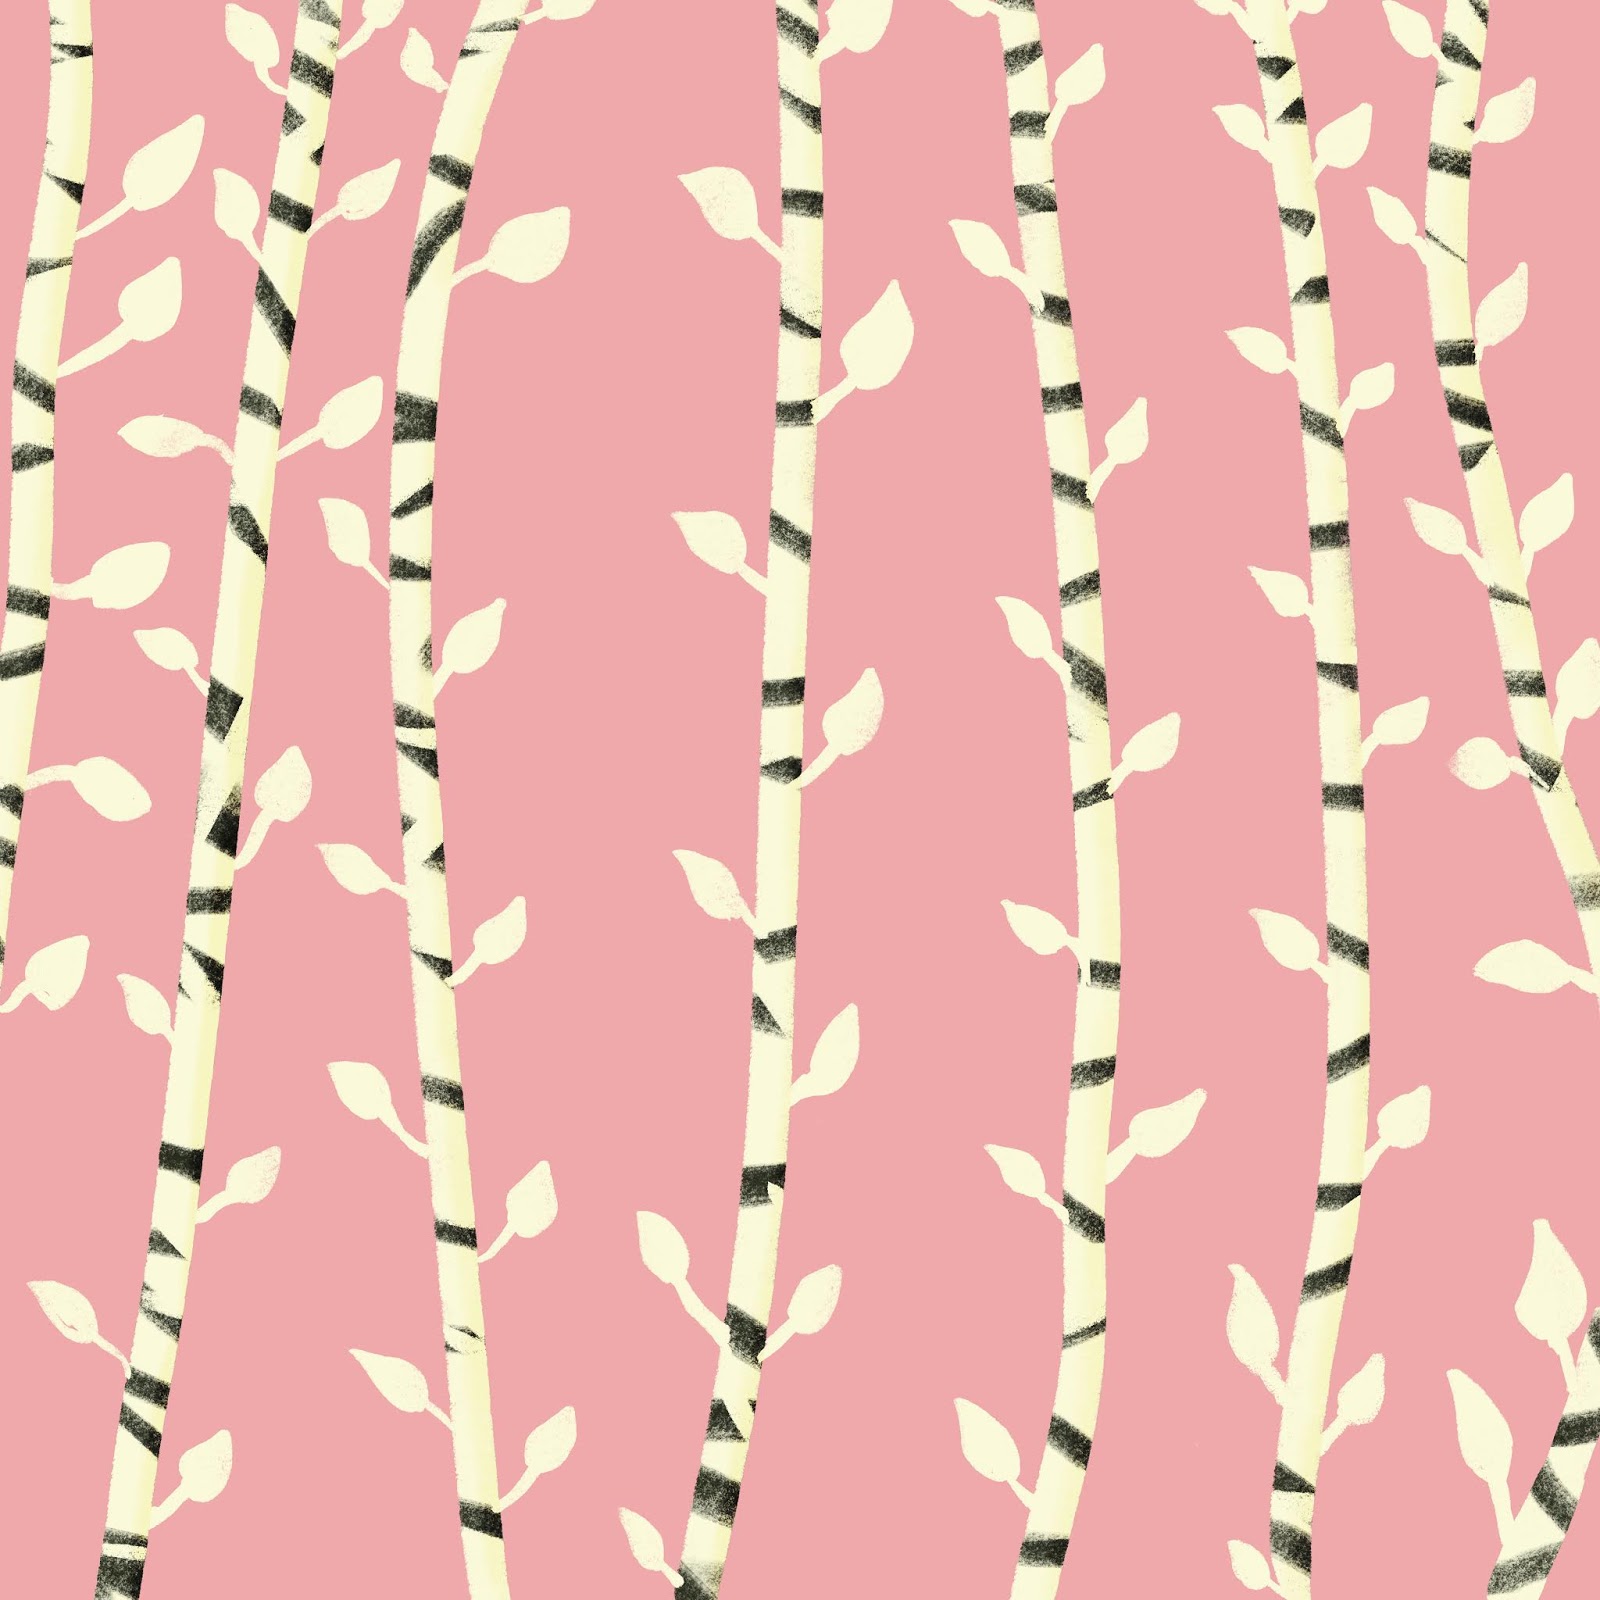 digital illustration pattern of birch on pink background by Stella Visual